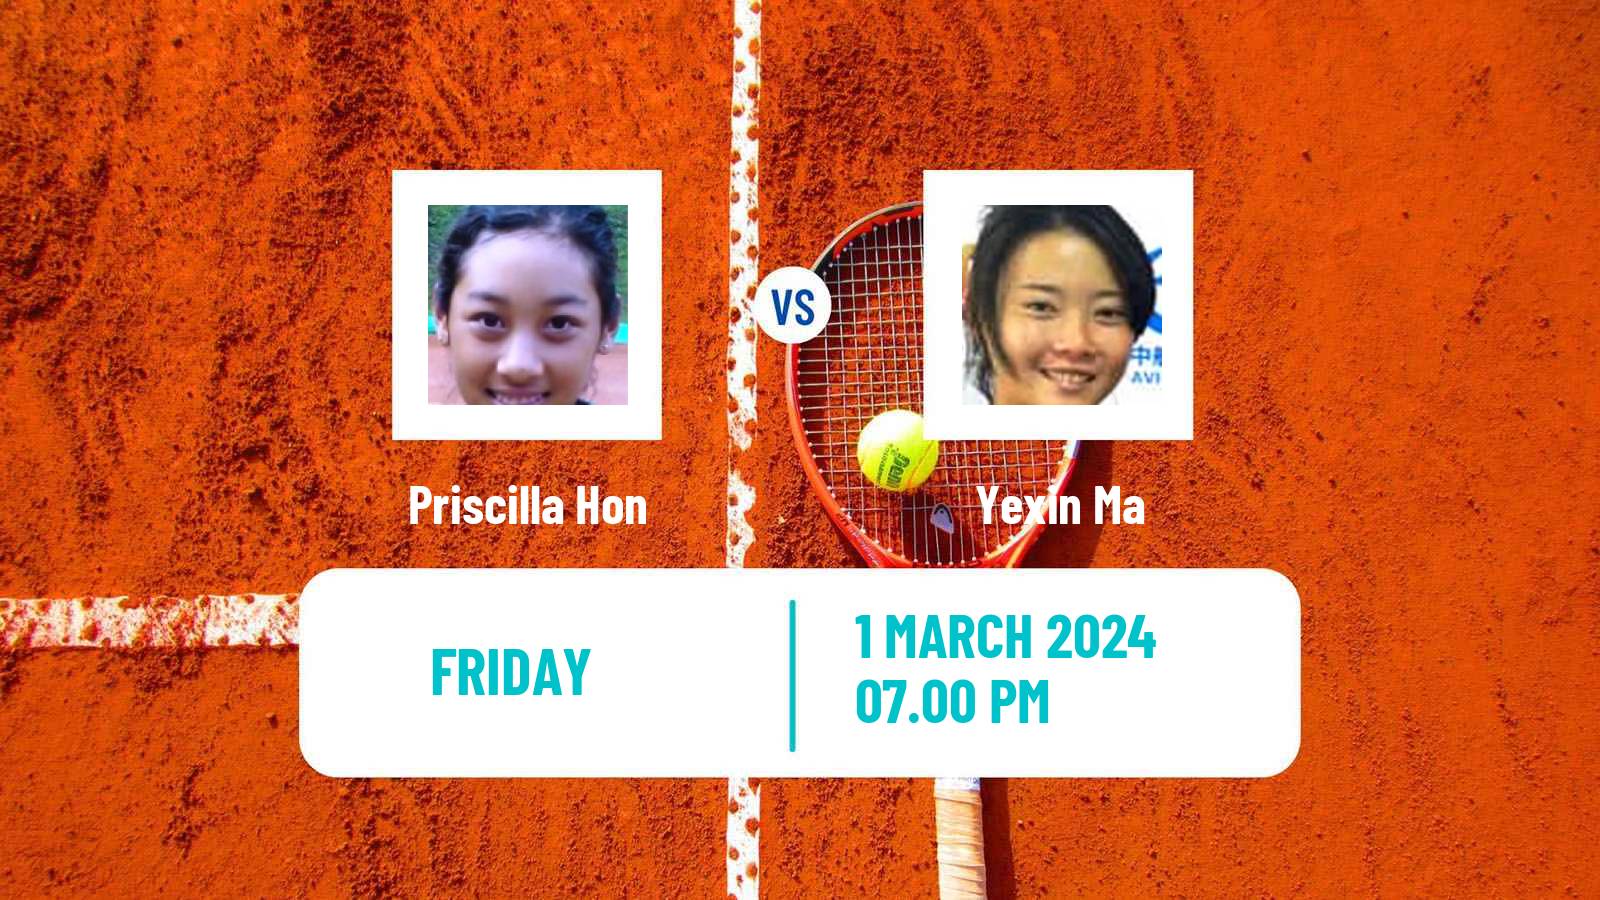 Tennis ITF W35 Traralgon 2 Women Priscilla Hon - Yexin Ma